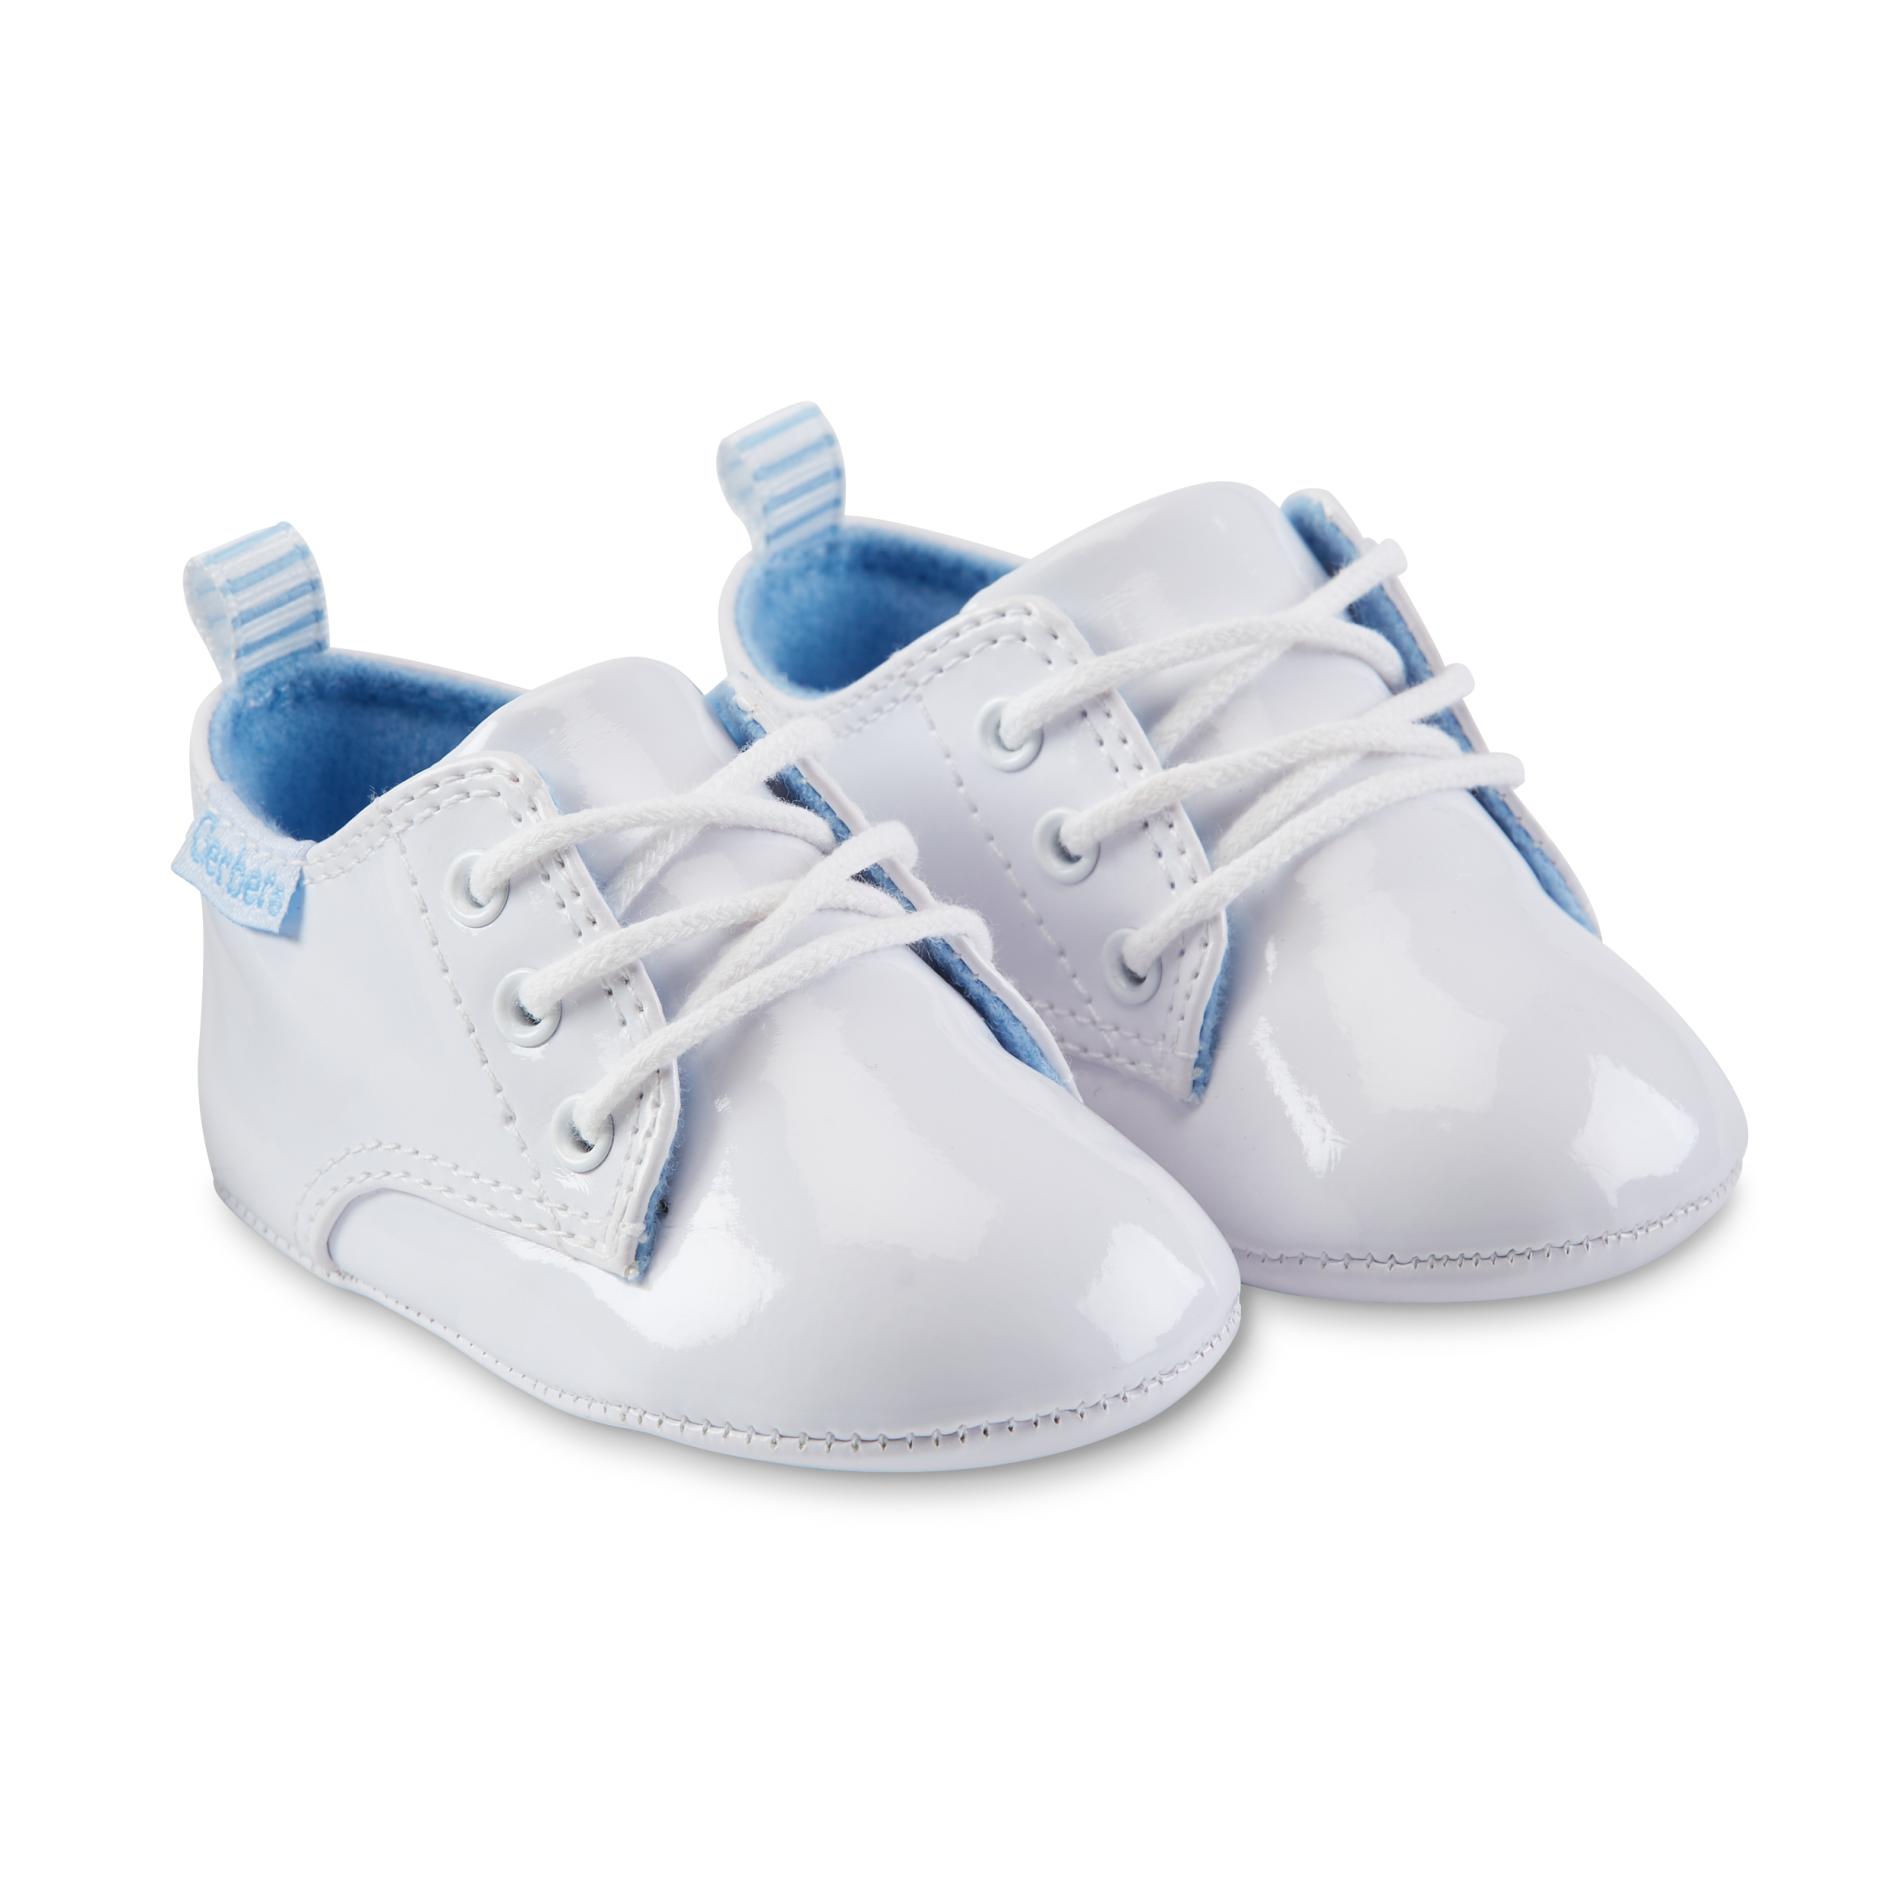 Gerber Baby Boy's White Dress Shoe - Shoes - Baby & Kids ...